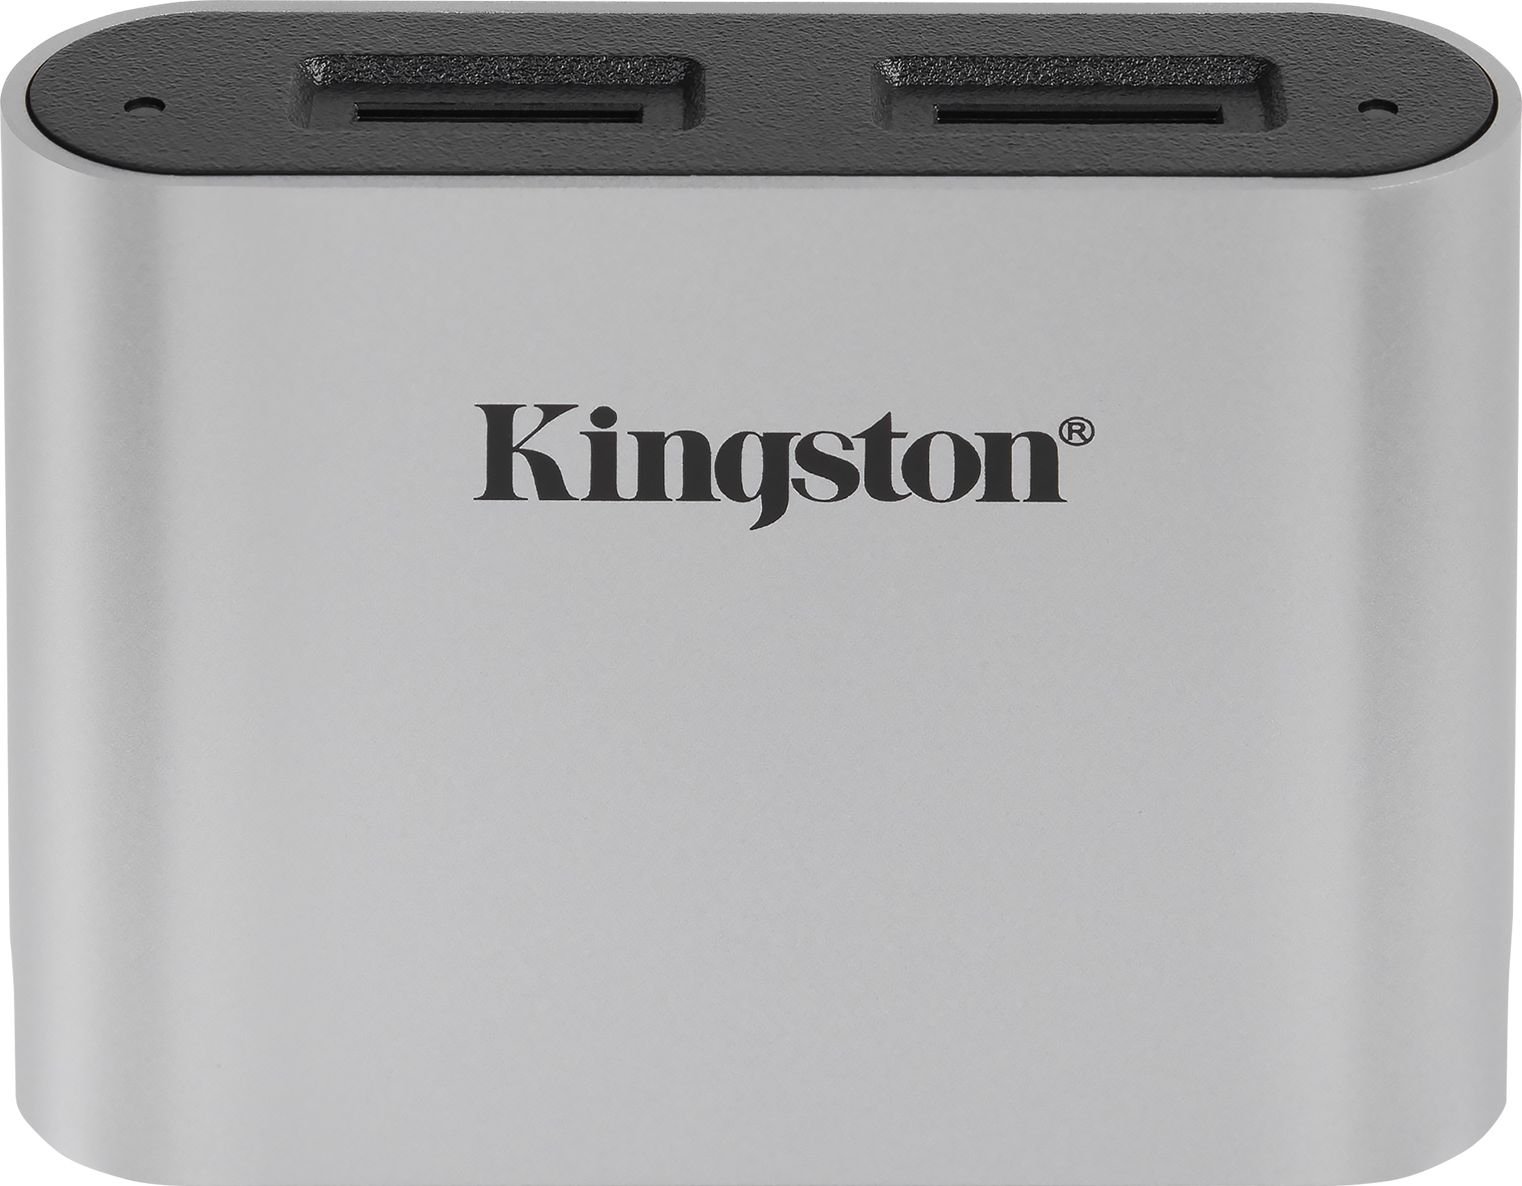 Kingston Workflow USB-C Card Reader